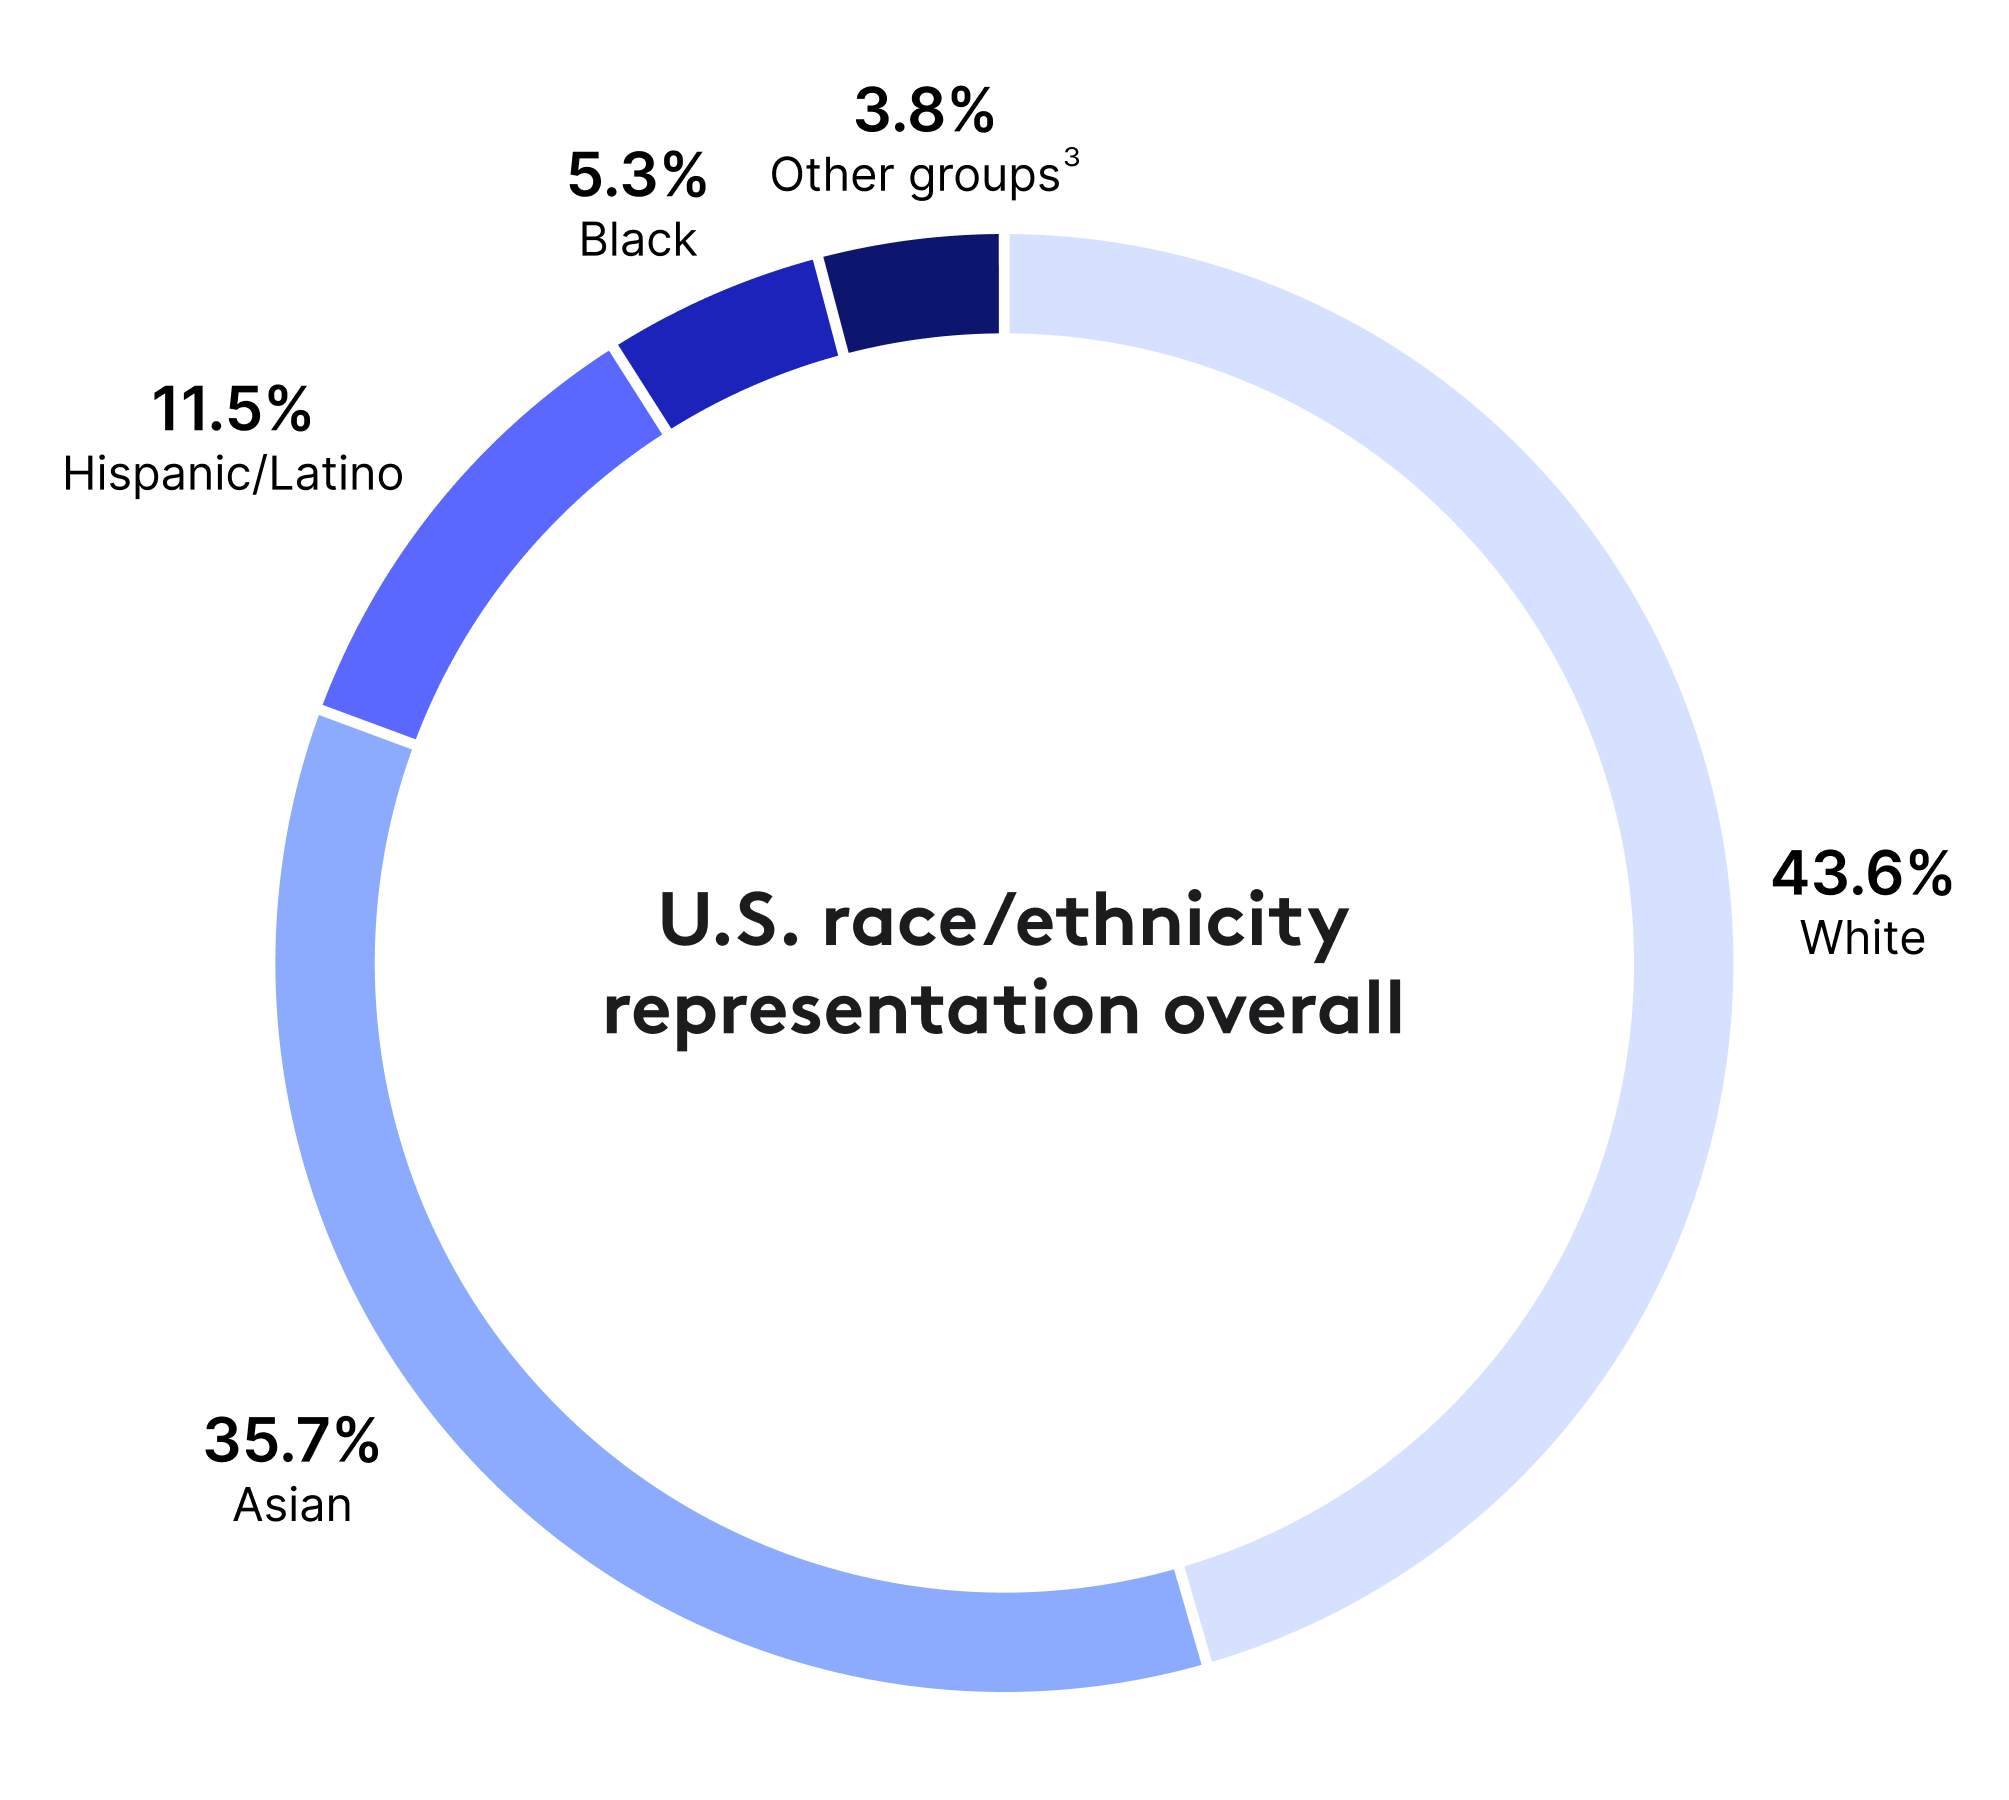 Overall U.S. staff race and ethnicity representation